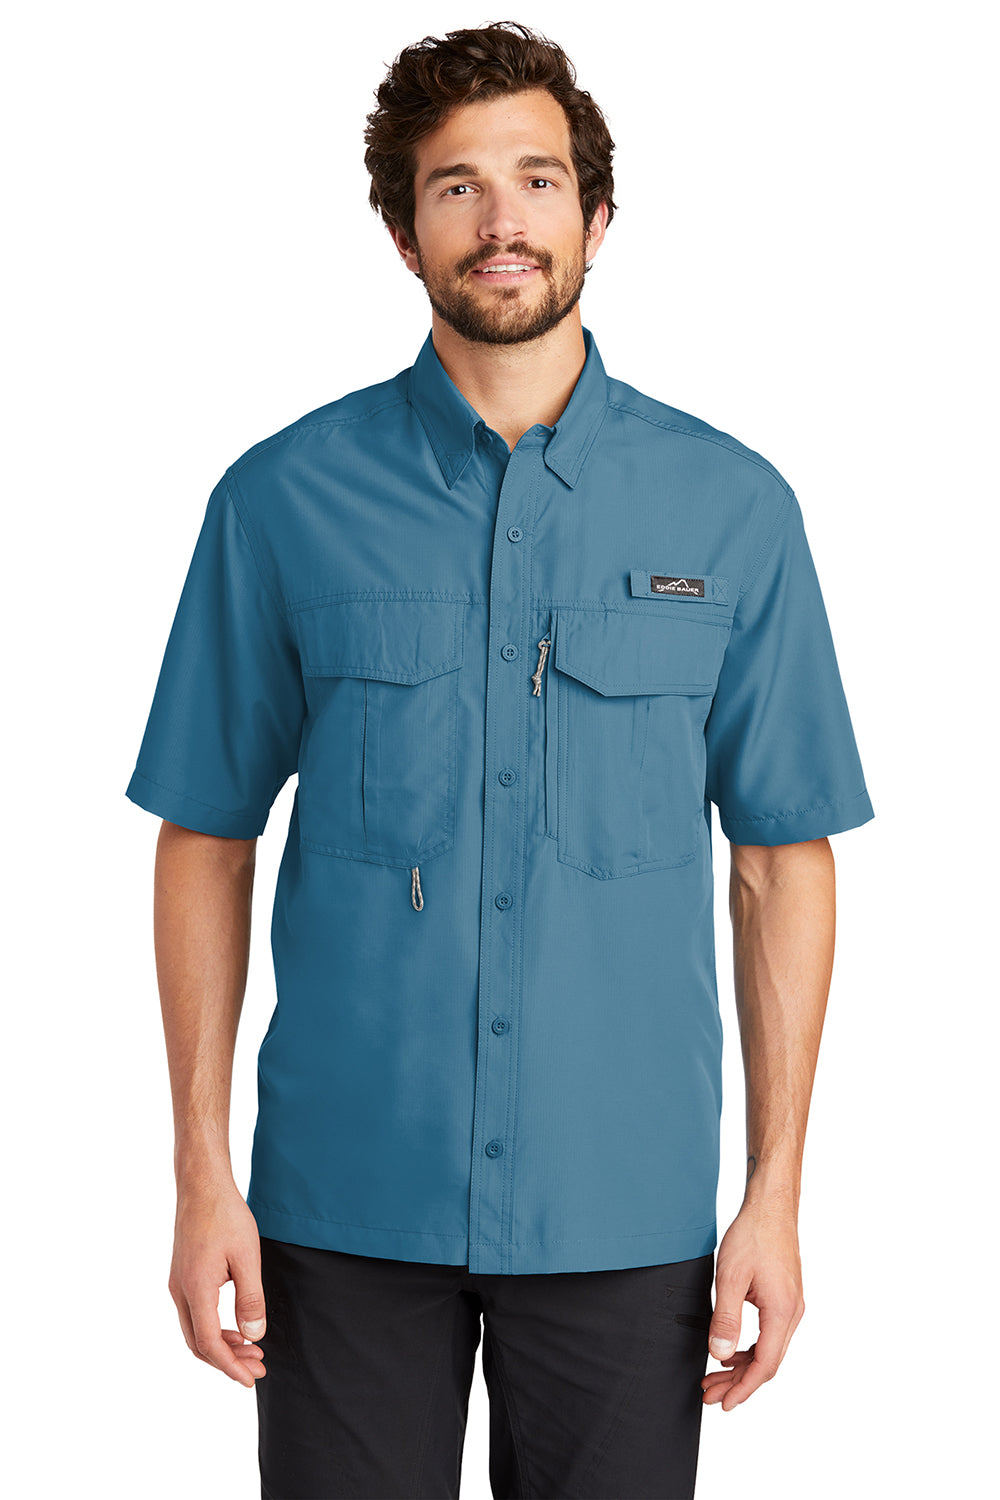 Eddie Bauer Mens Performance Fishing Moisture Wicking Short Sleeve Button  Down Shirt w/ Double Pockets - Gulf Teal Blue